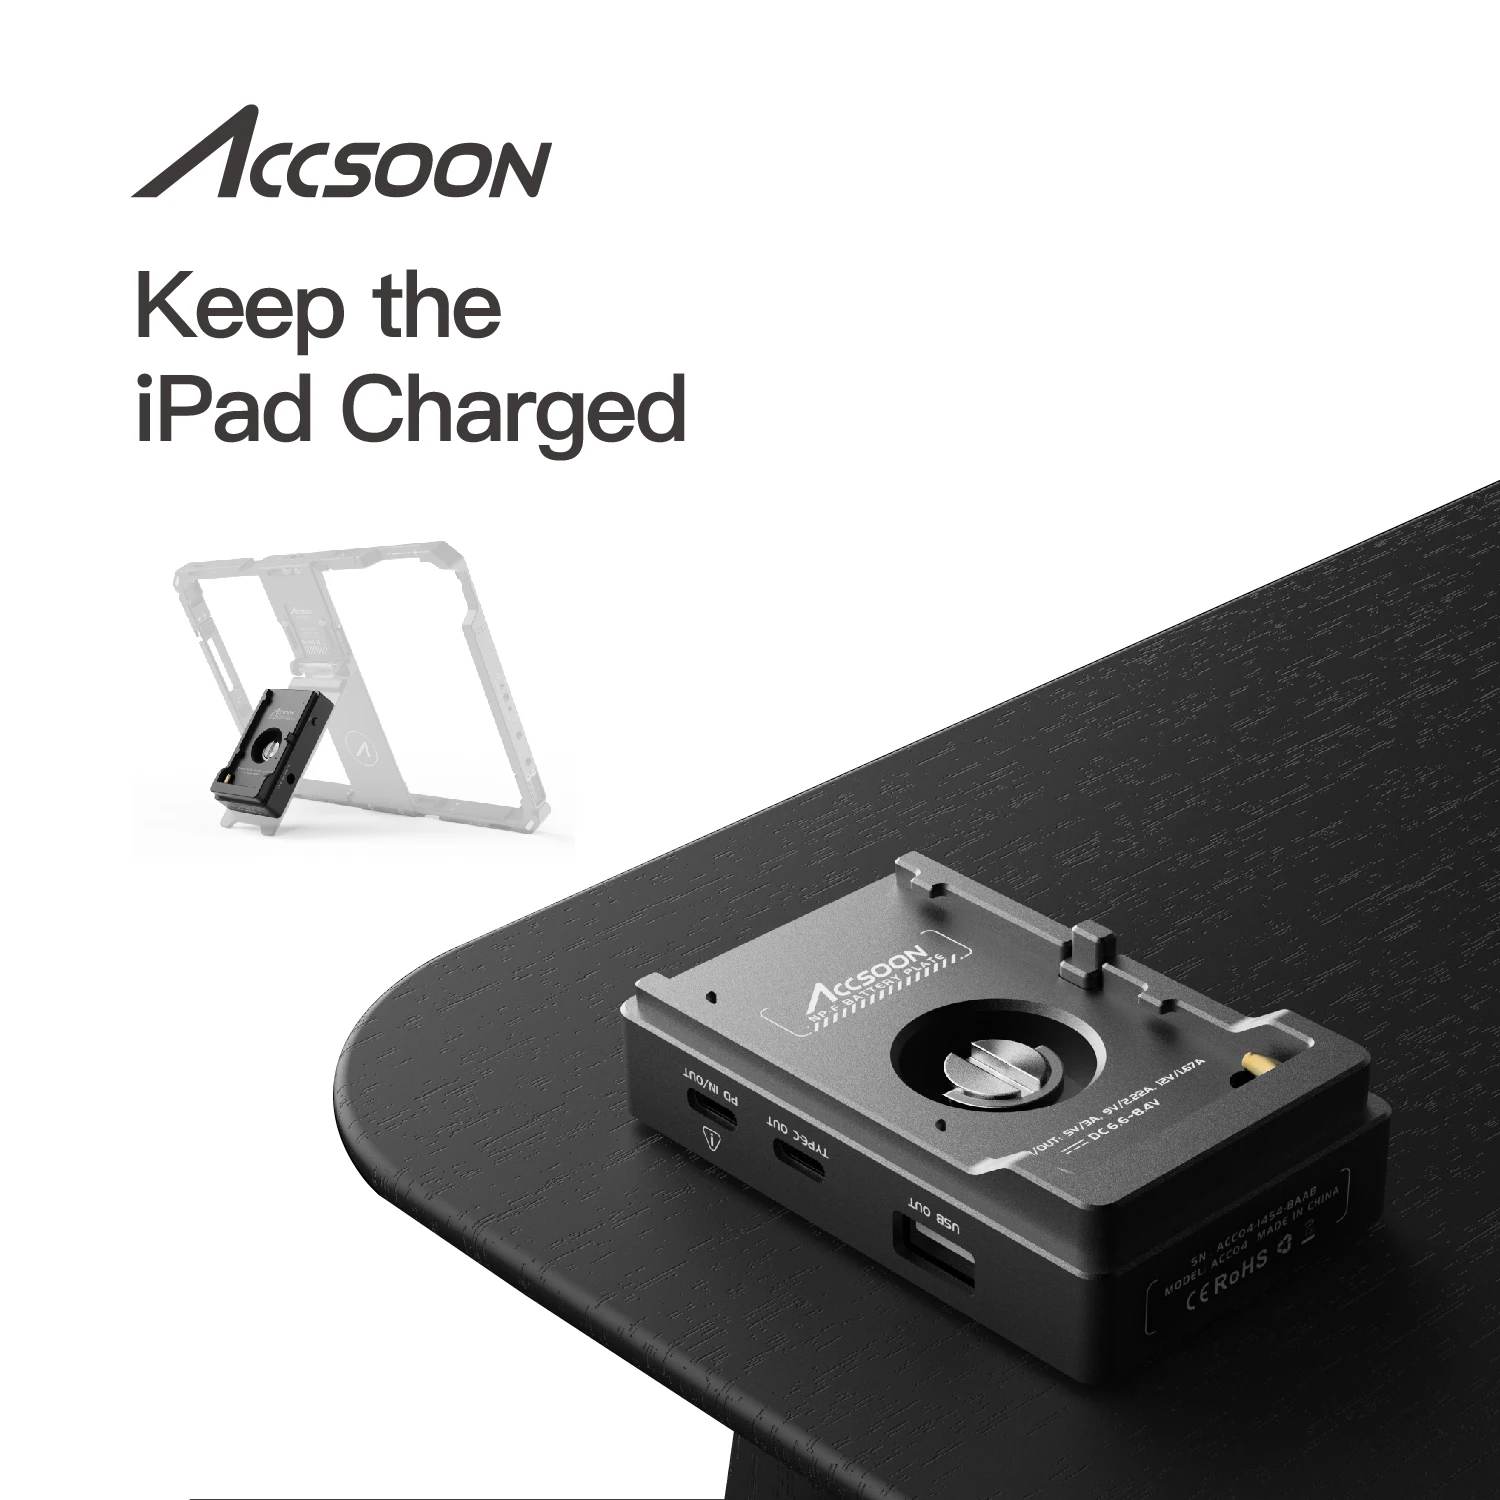 ACCSOON SEEMO iPad PowerCage Rinkinys, Skirtas 